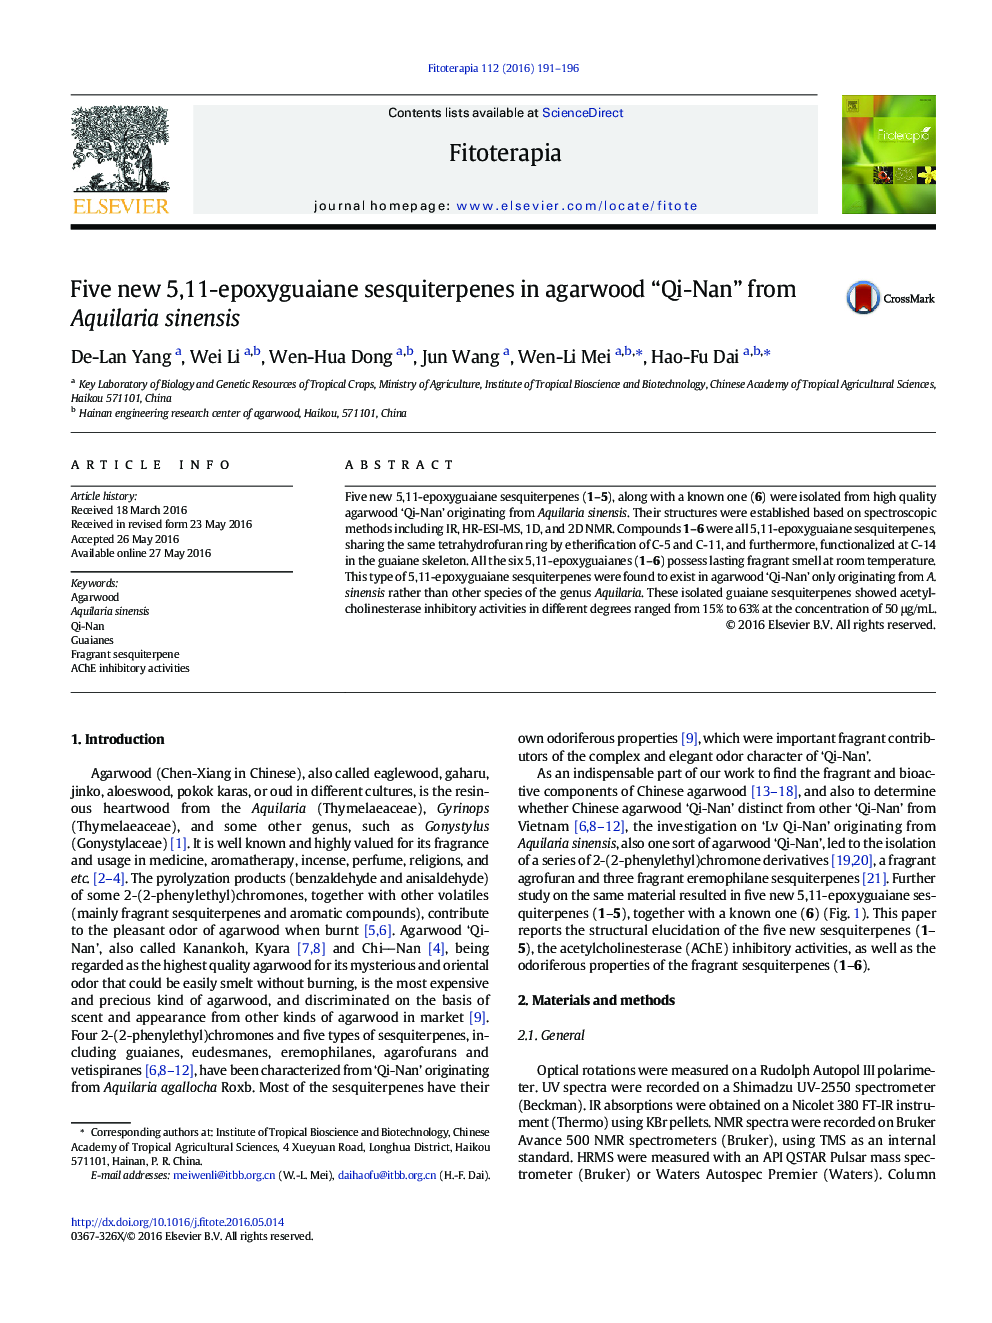 Five new 5,11-epoxyguaiane sesquiterpenes in agarwood “Qi-Nan” from Aquilaria sinensis